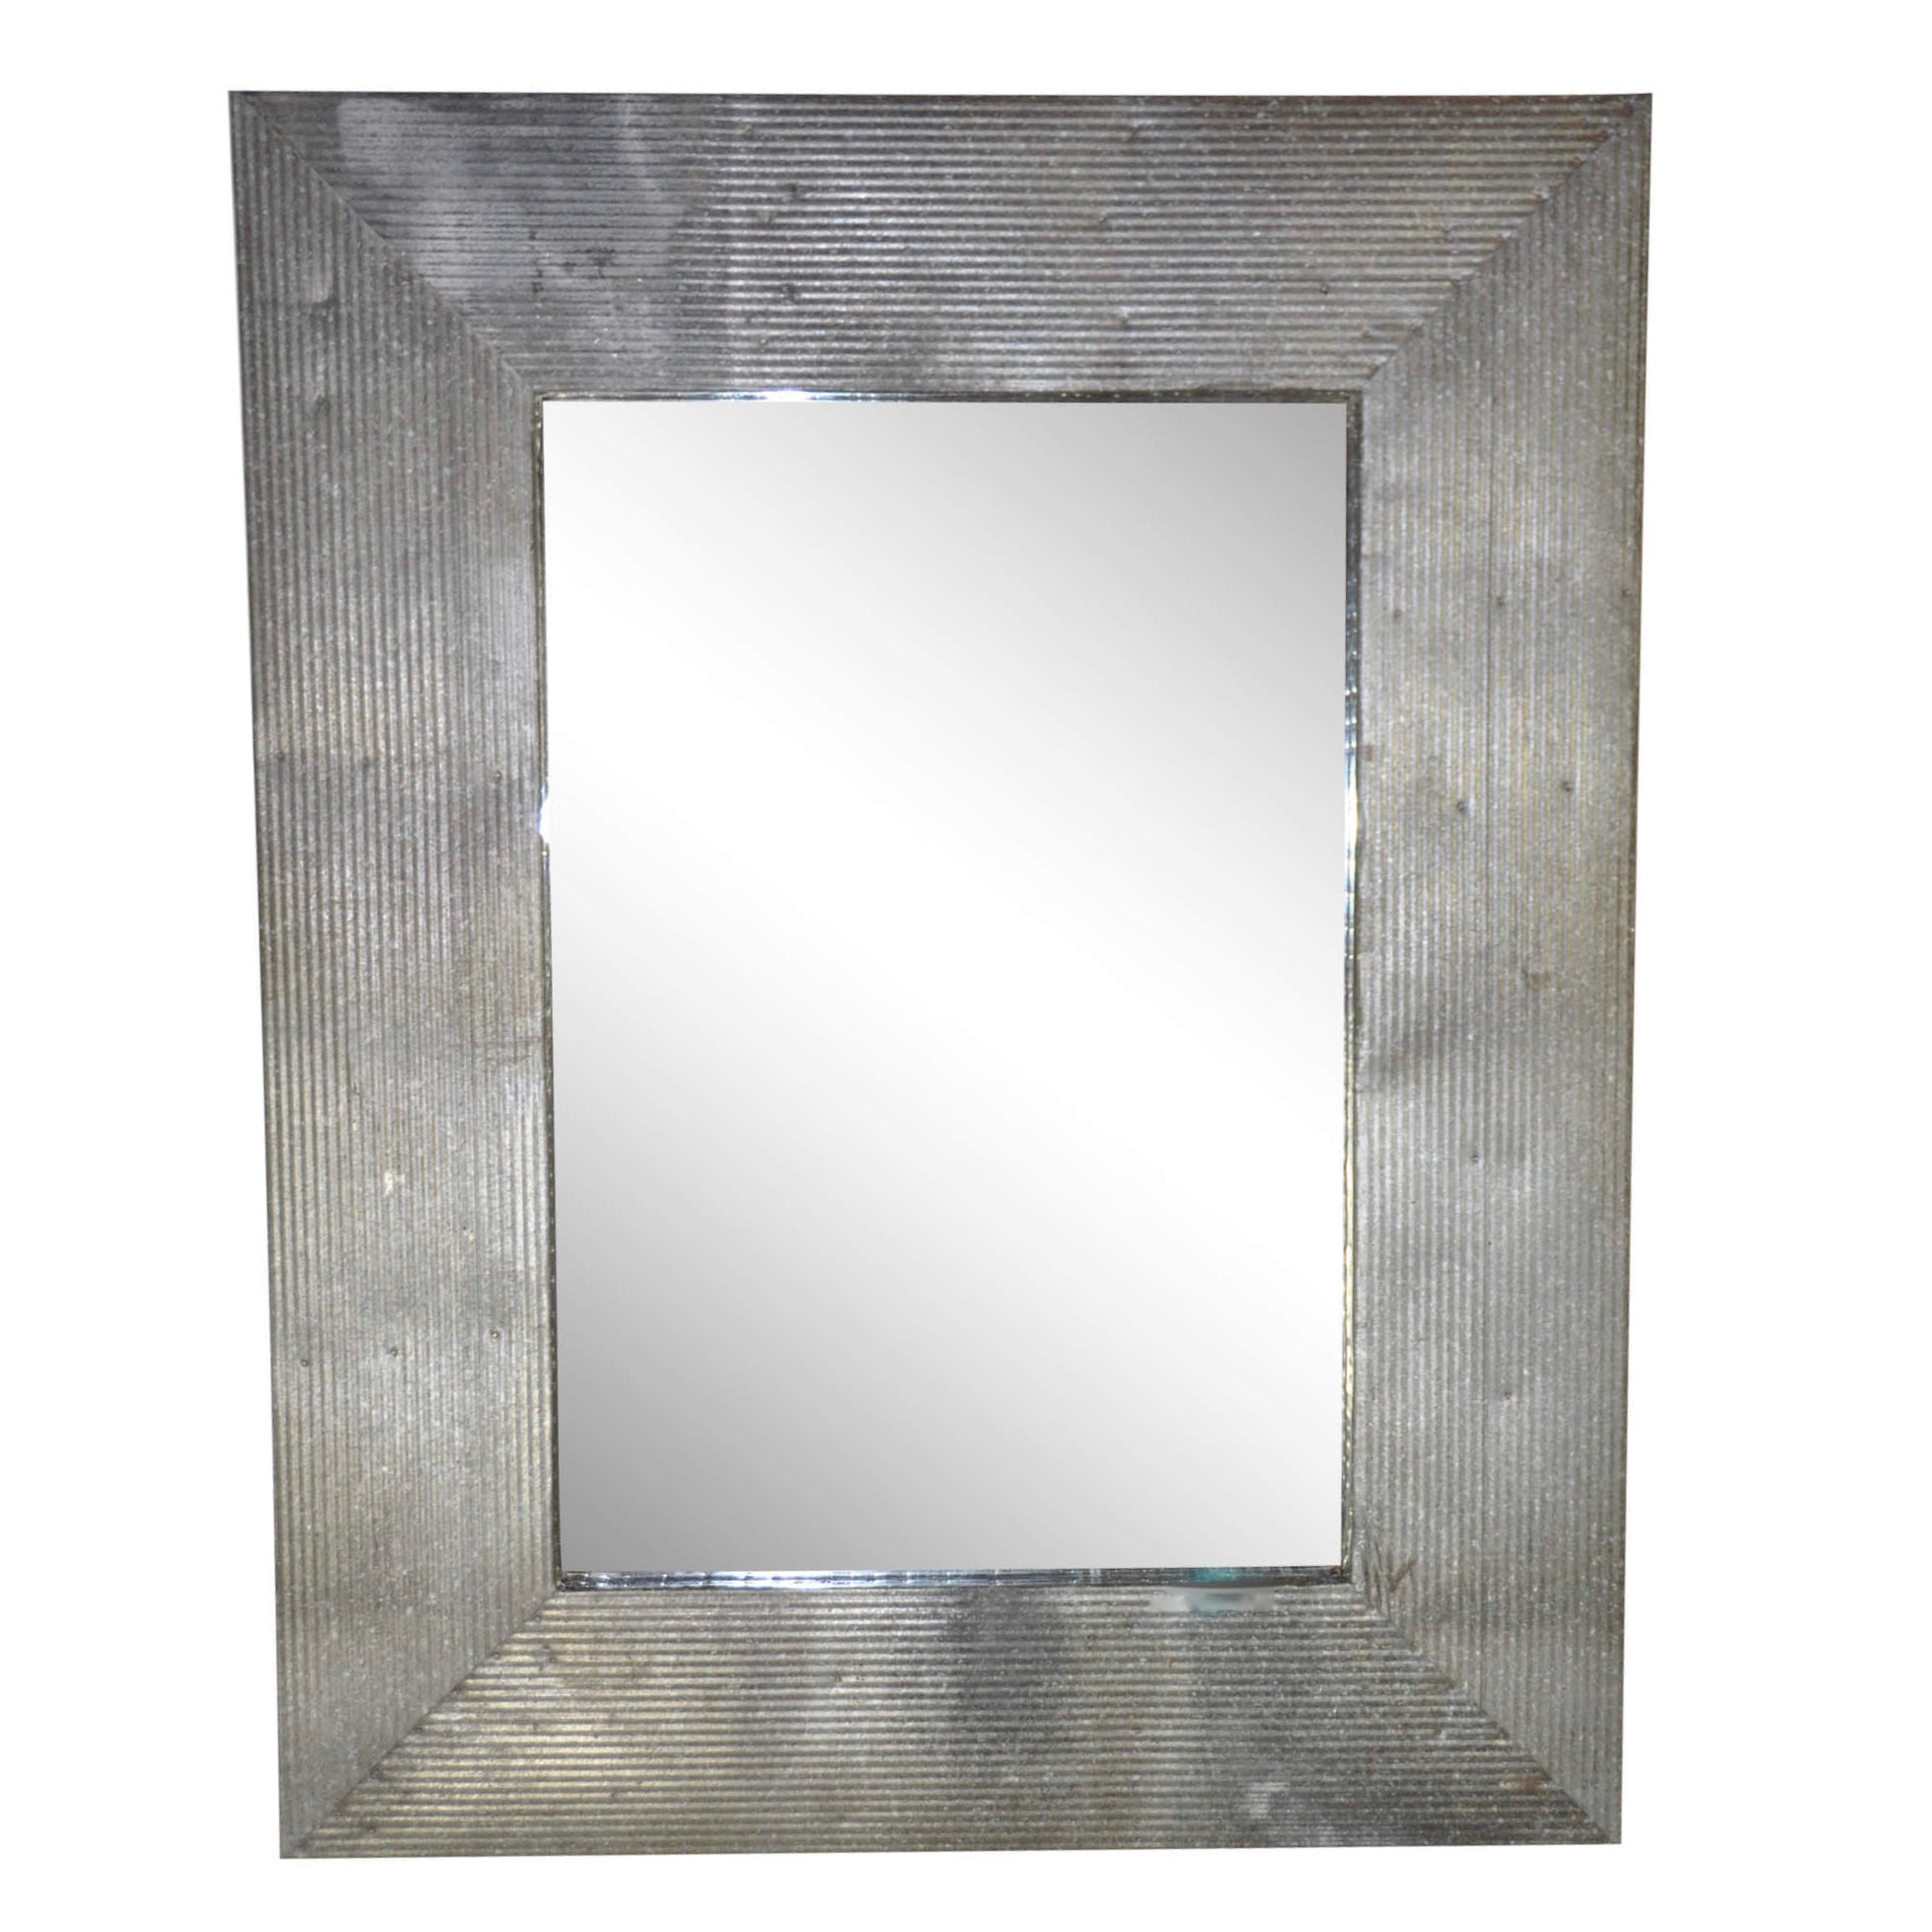 Corrugated Tin Mirror